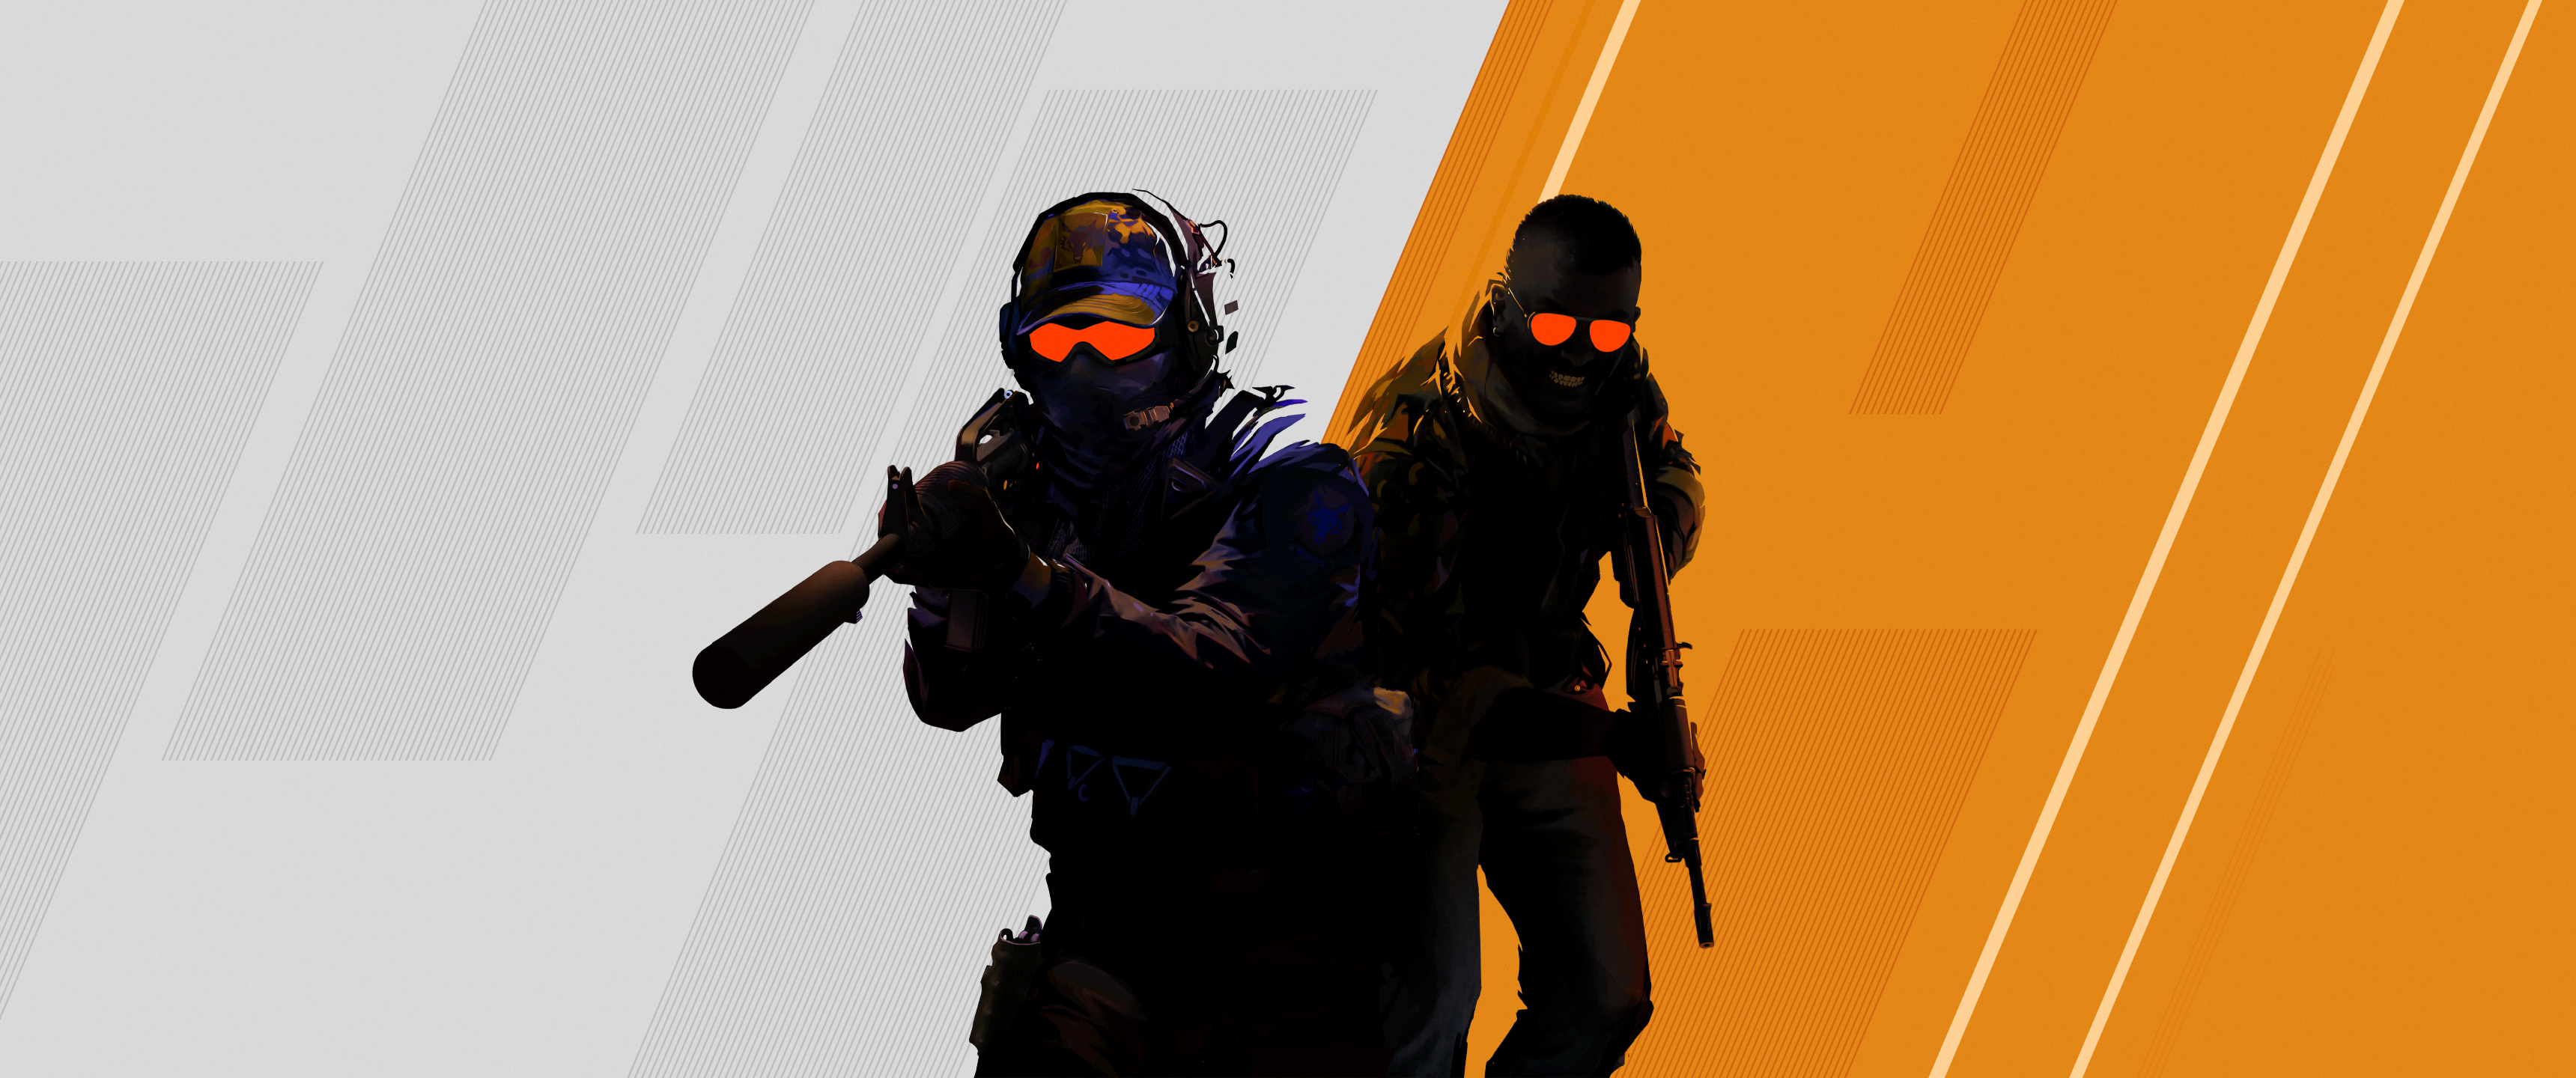 Counter Strike 2 Valve Weapon Men Ultrawide Video Games Video Game Art Gun Hat Uniform Simple Backgr 3440x1440